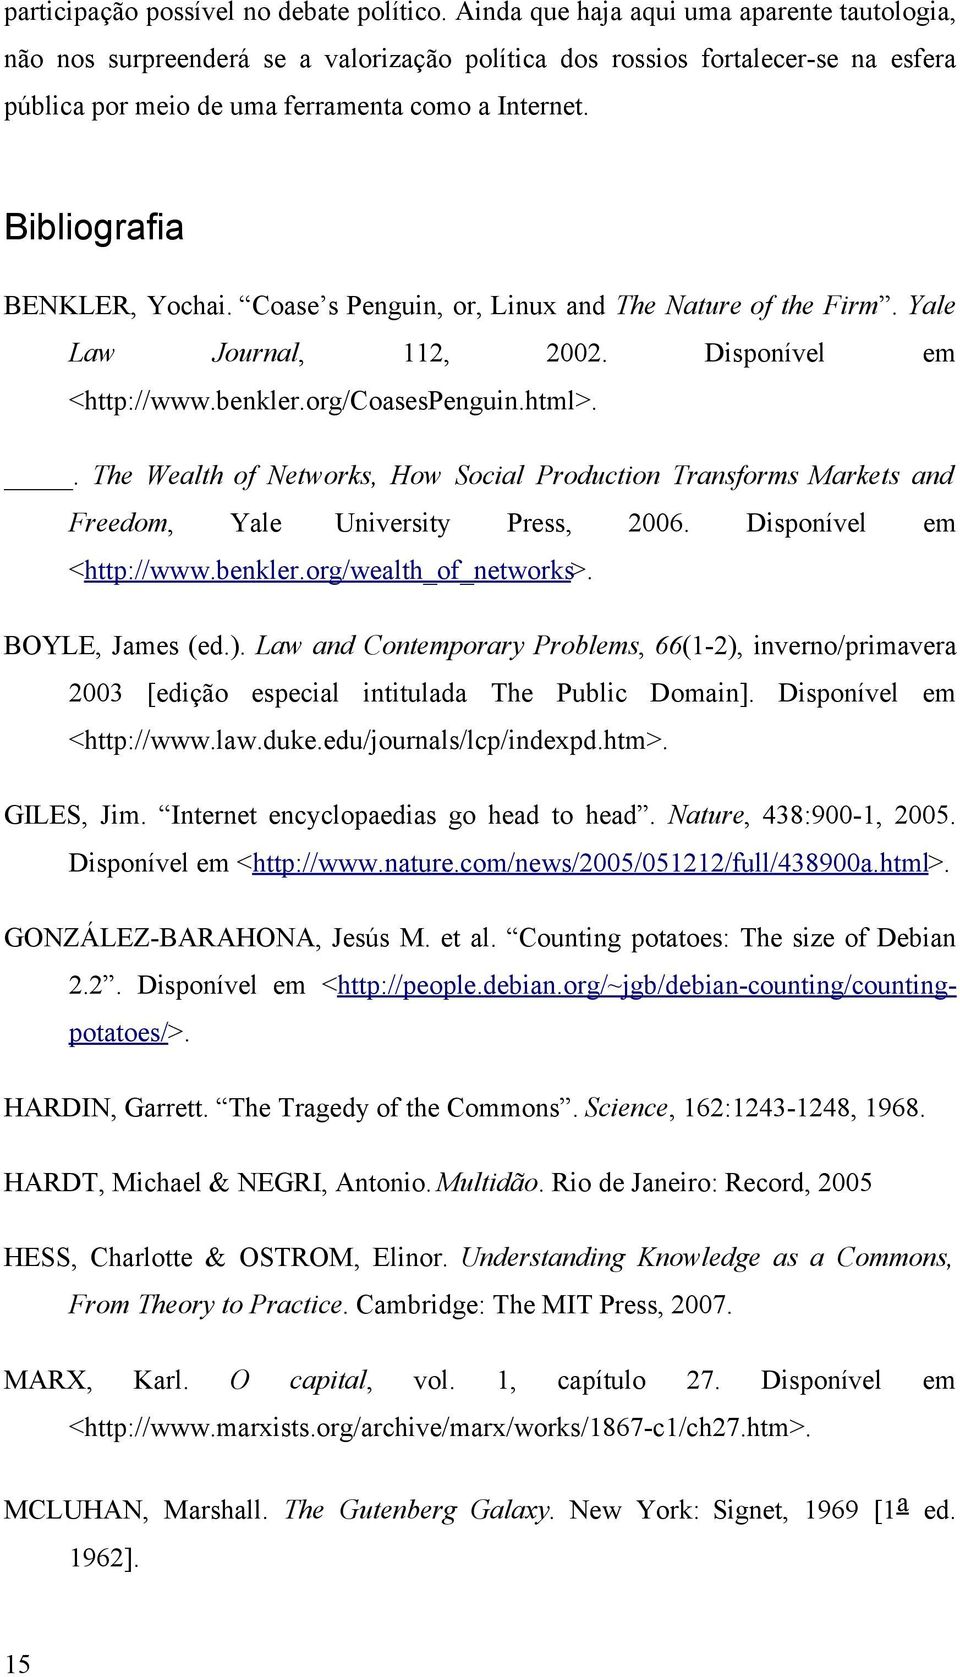 Bibliografia BENKLER, Yochai. Coase s Penguin, or, Linux and The Nature of the Firm. Yale Law Journal, 112, 2002. Disponível em <http://www.benkler.org/coasespenguin.html>.